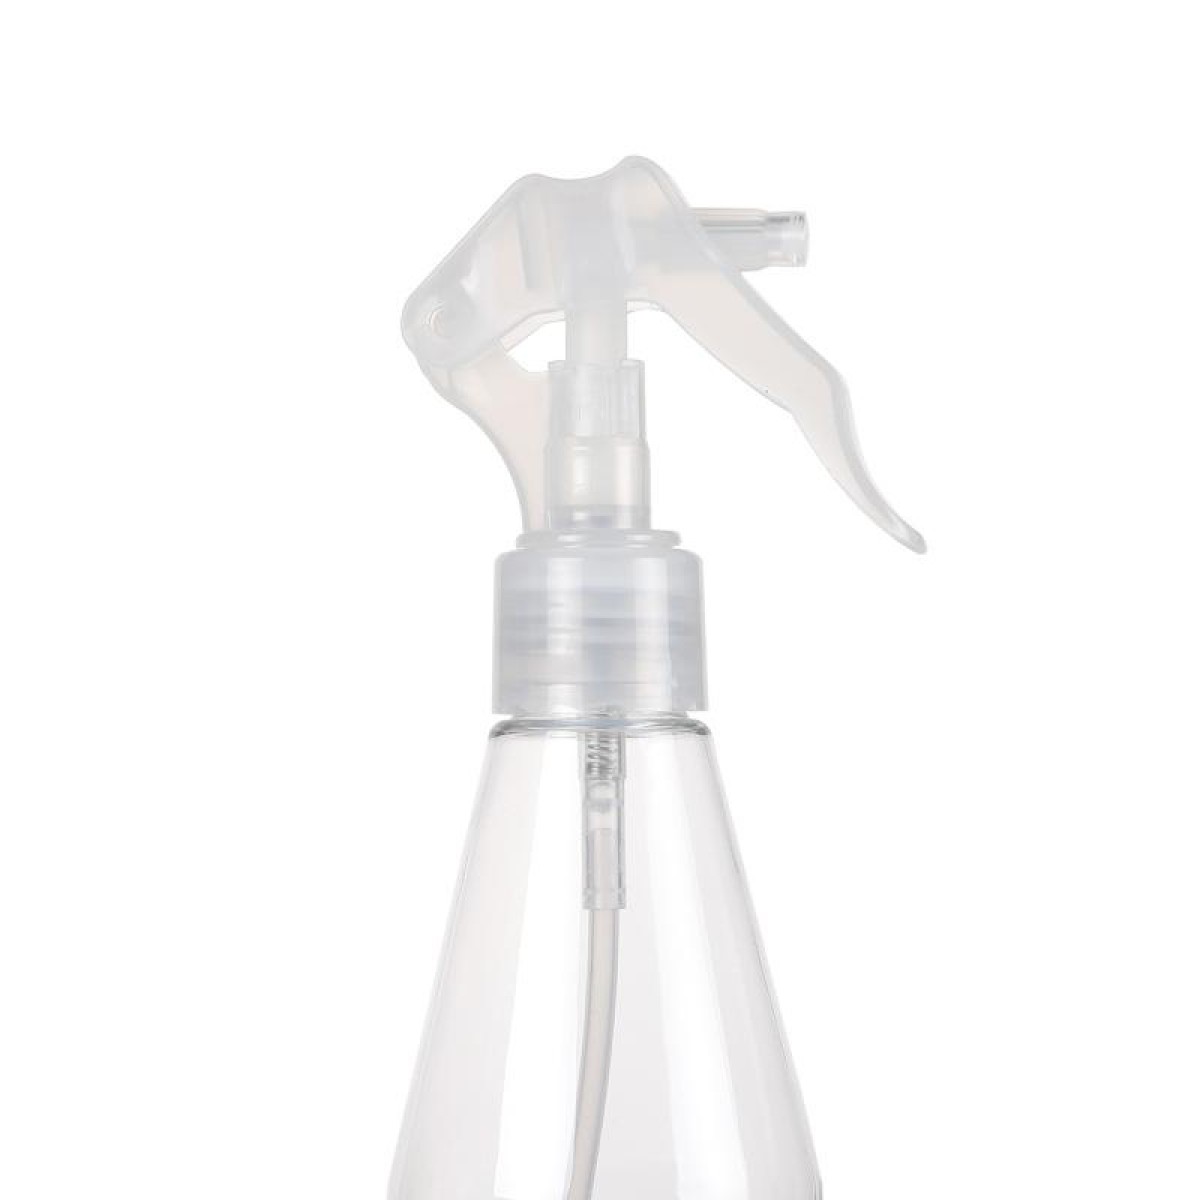 LW-SM08 Plastic Spray Bottles Leak Proof with Trigger Sprayer, 200ml